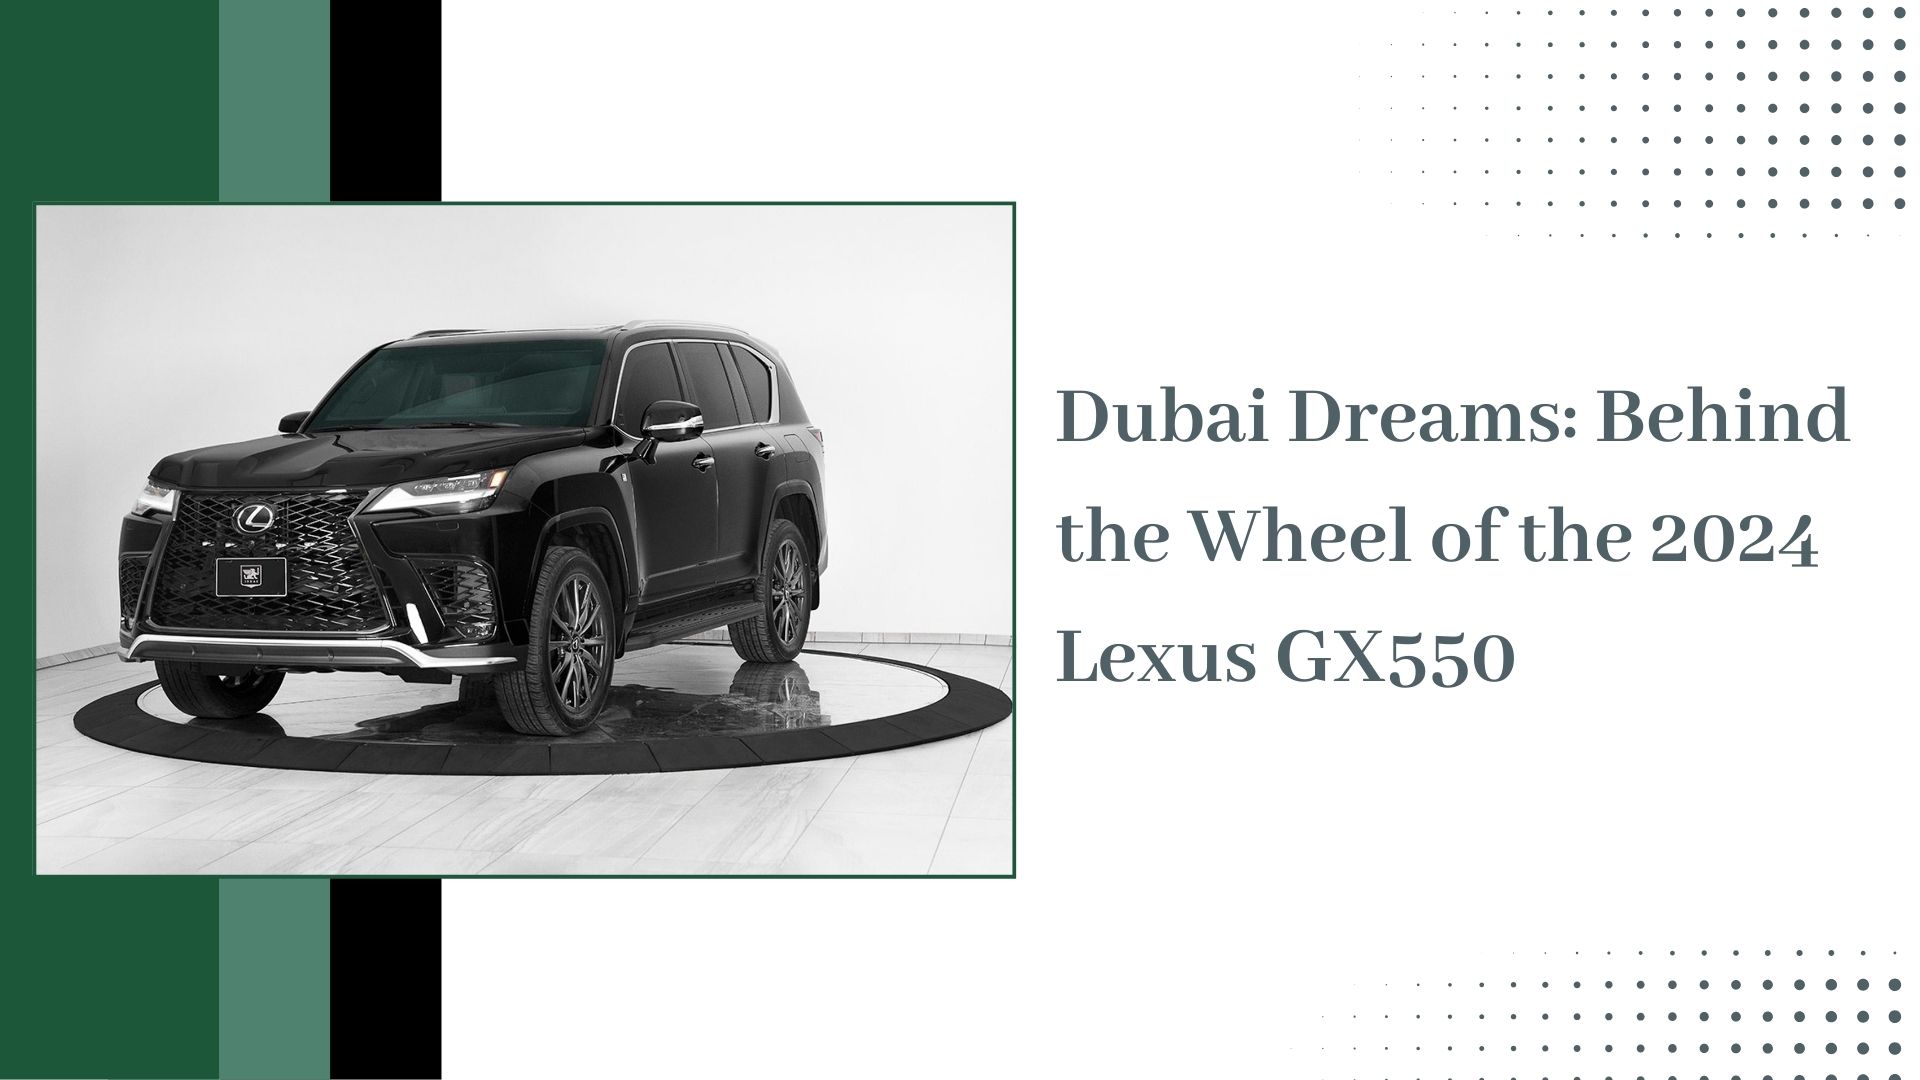 2024 Lexus GX550 Dubai